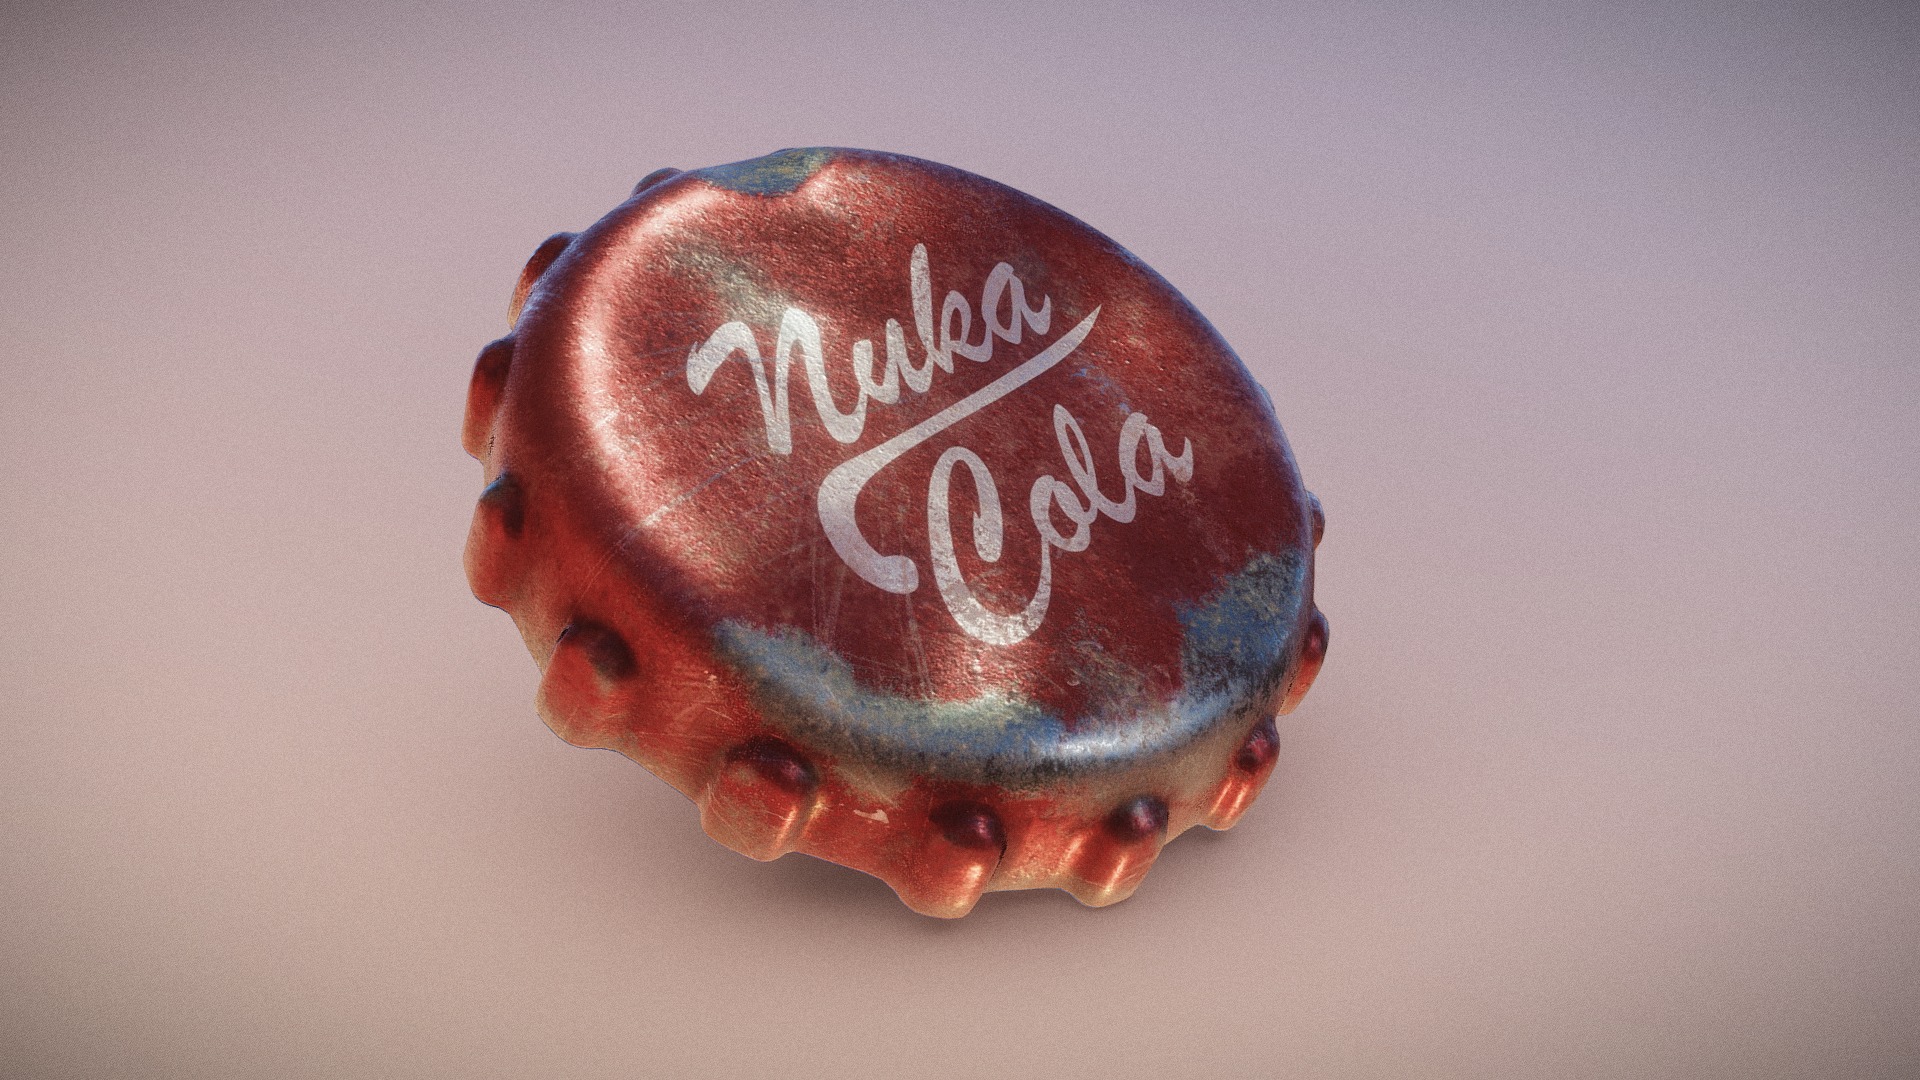 Nuka Cola Cap, Fallout 4 Fanart. 

Modelled in Blender, Textured in Substance Painter - Nuka Cola Cap - 3D model by Blackhart 3d model